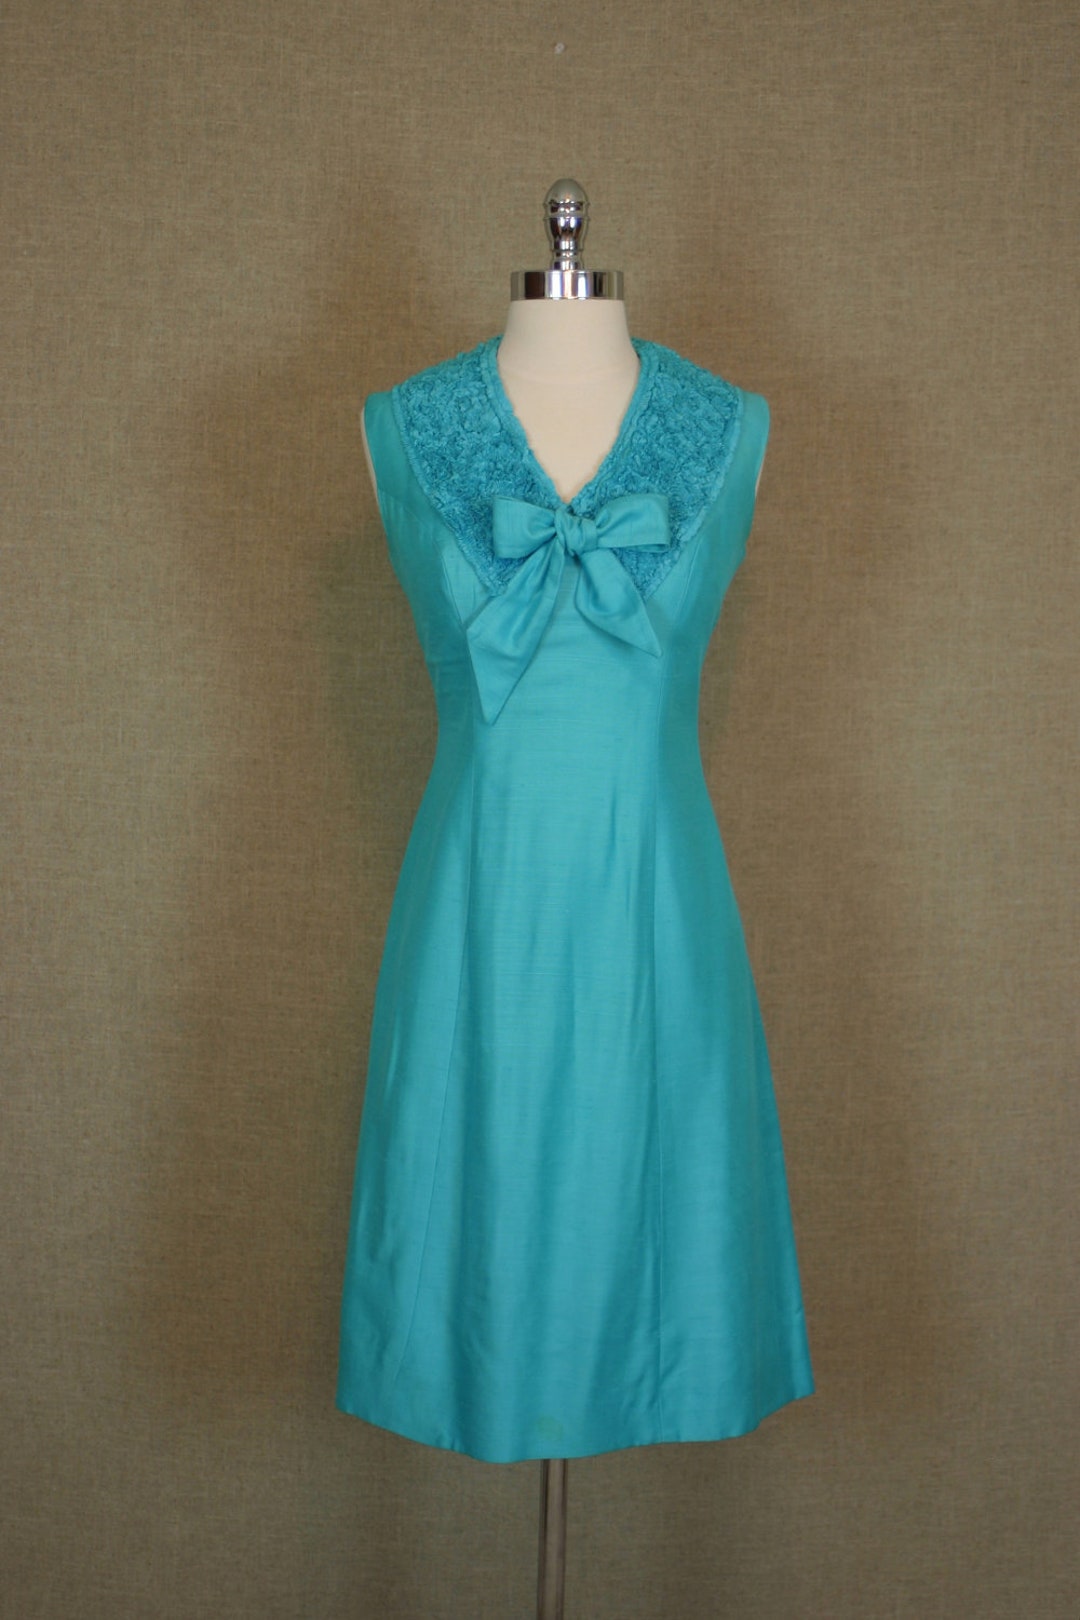 SALE 1960s Dress / Vintage Turquoise Raw Silk Sheath Dress - Etsy